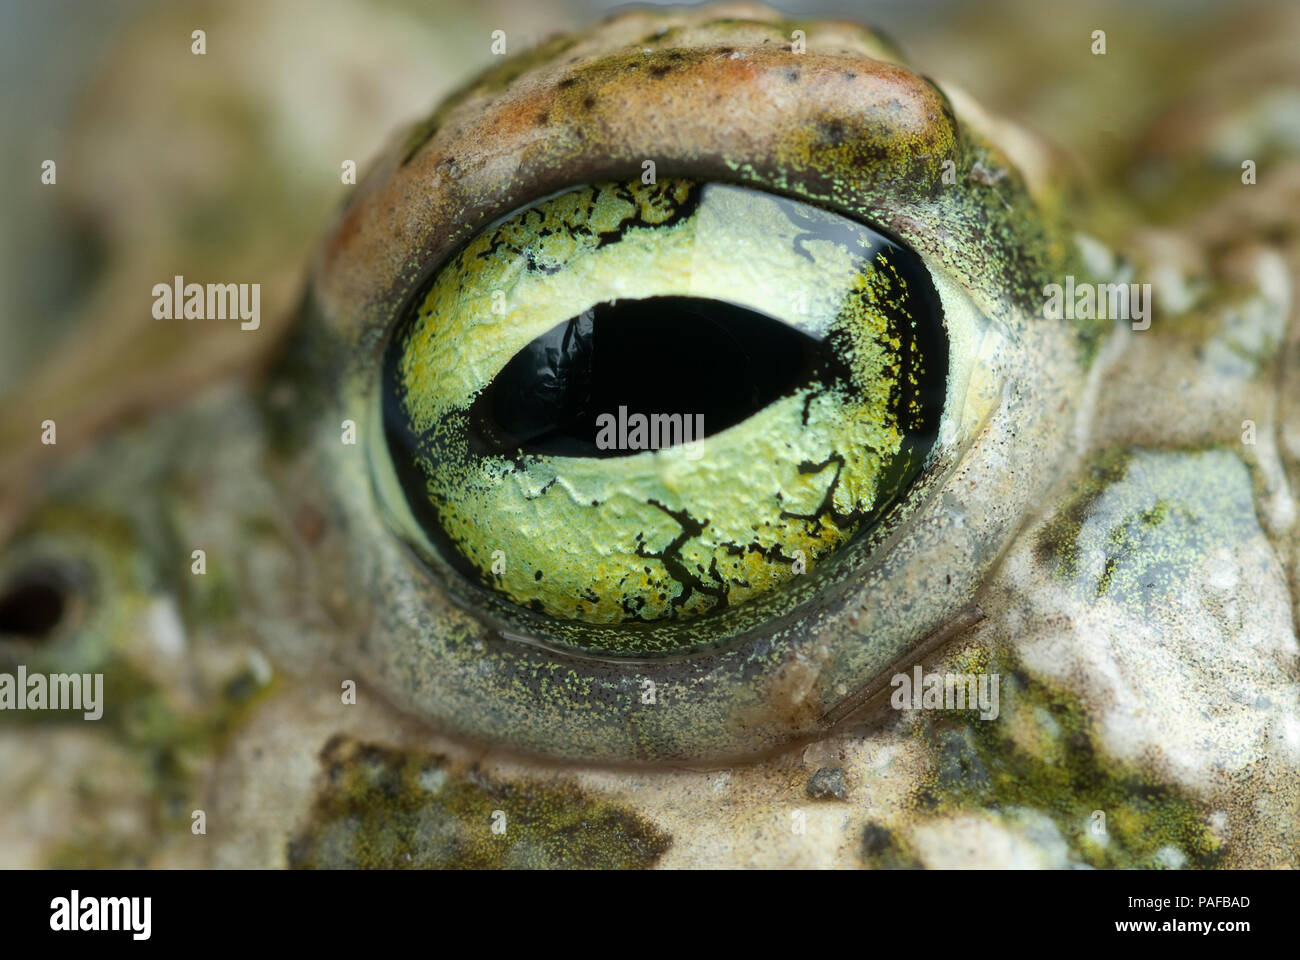 Spadefoot toad, Pelobates cultripes, amphibian Stock Photo